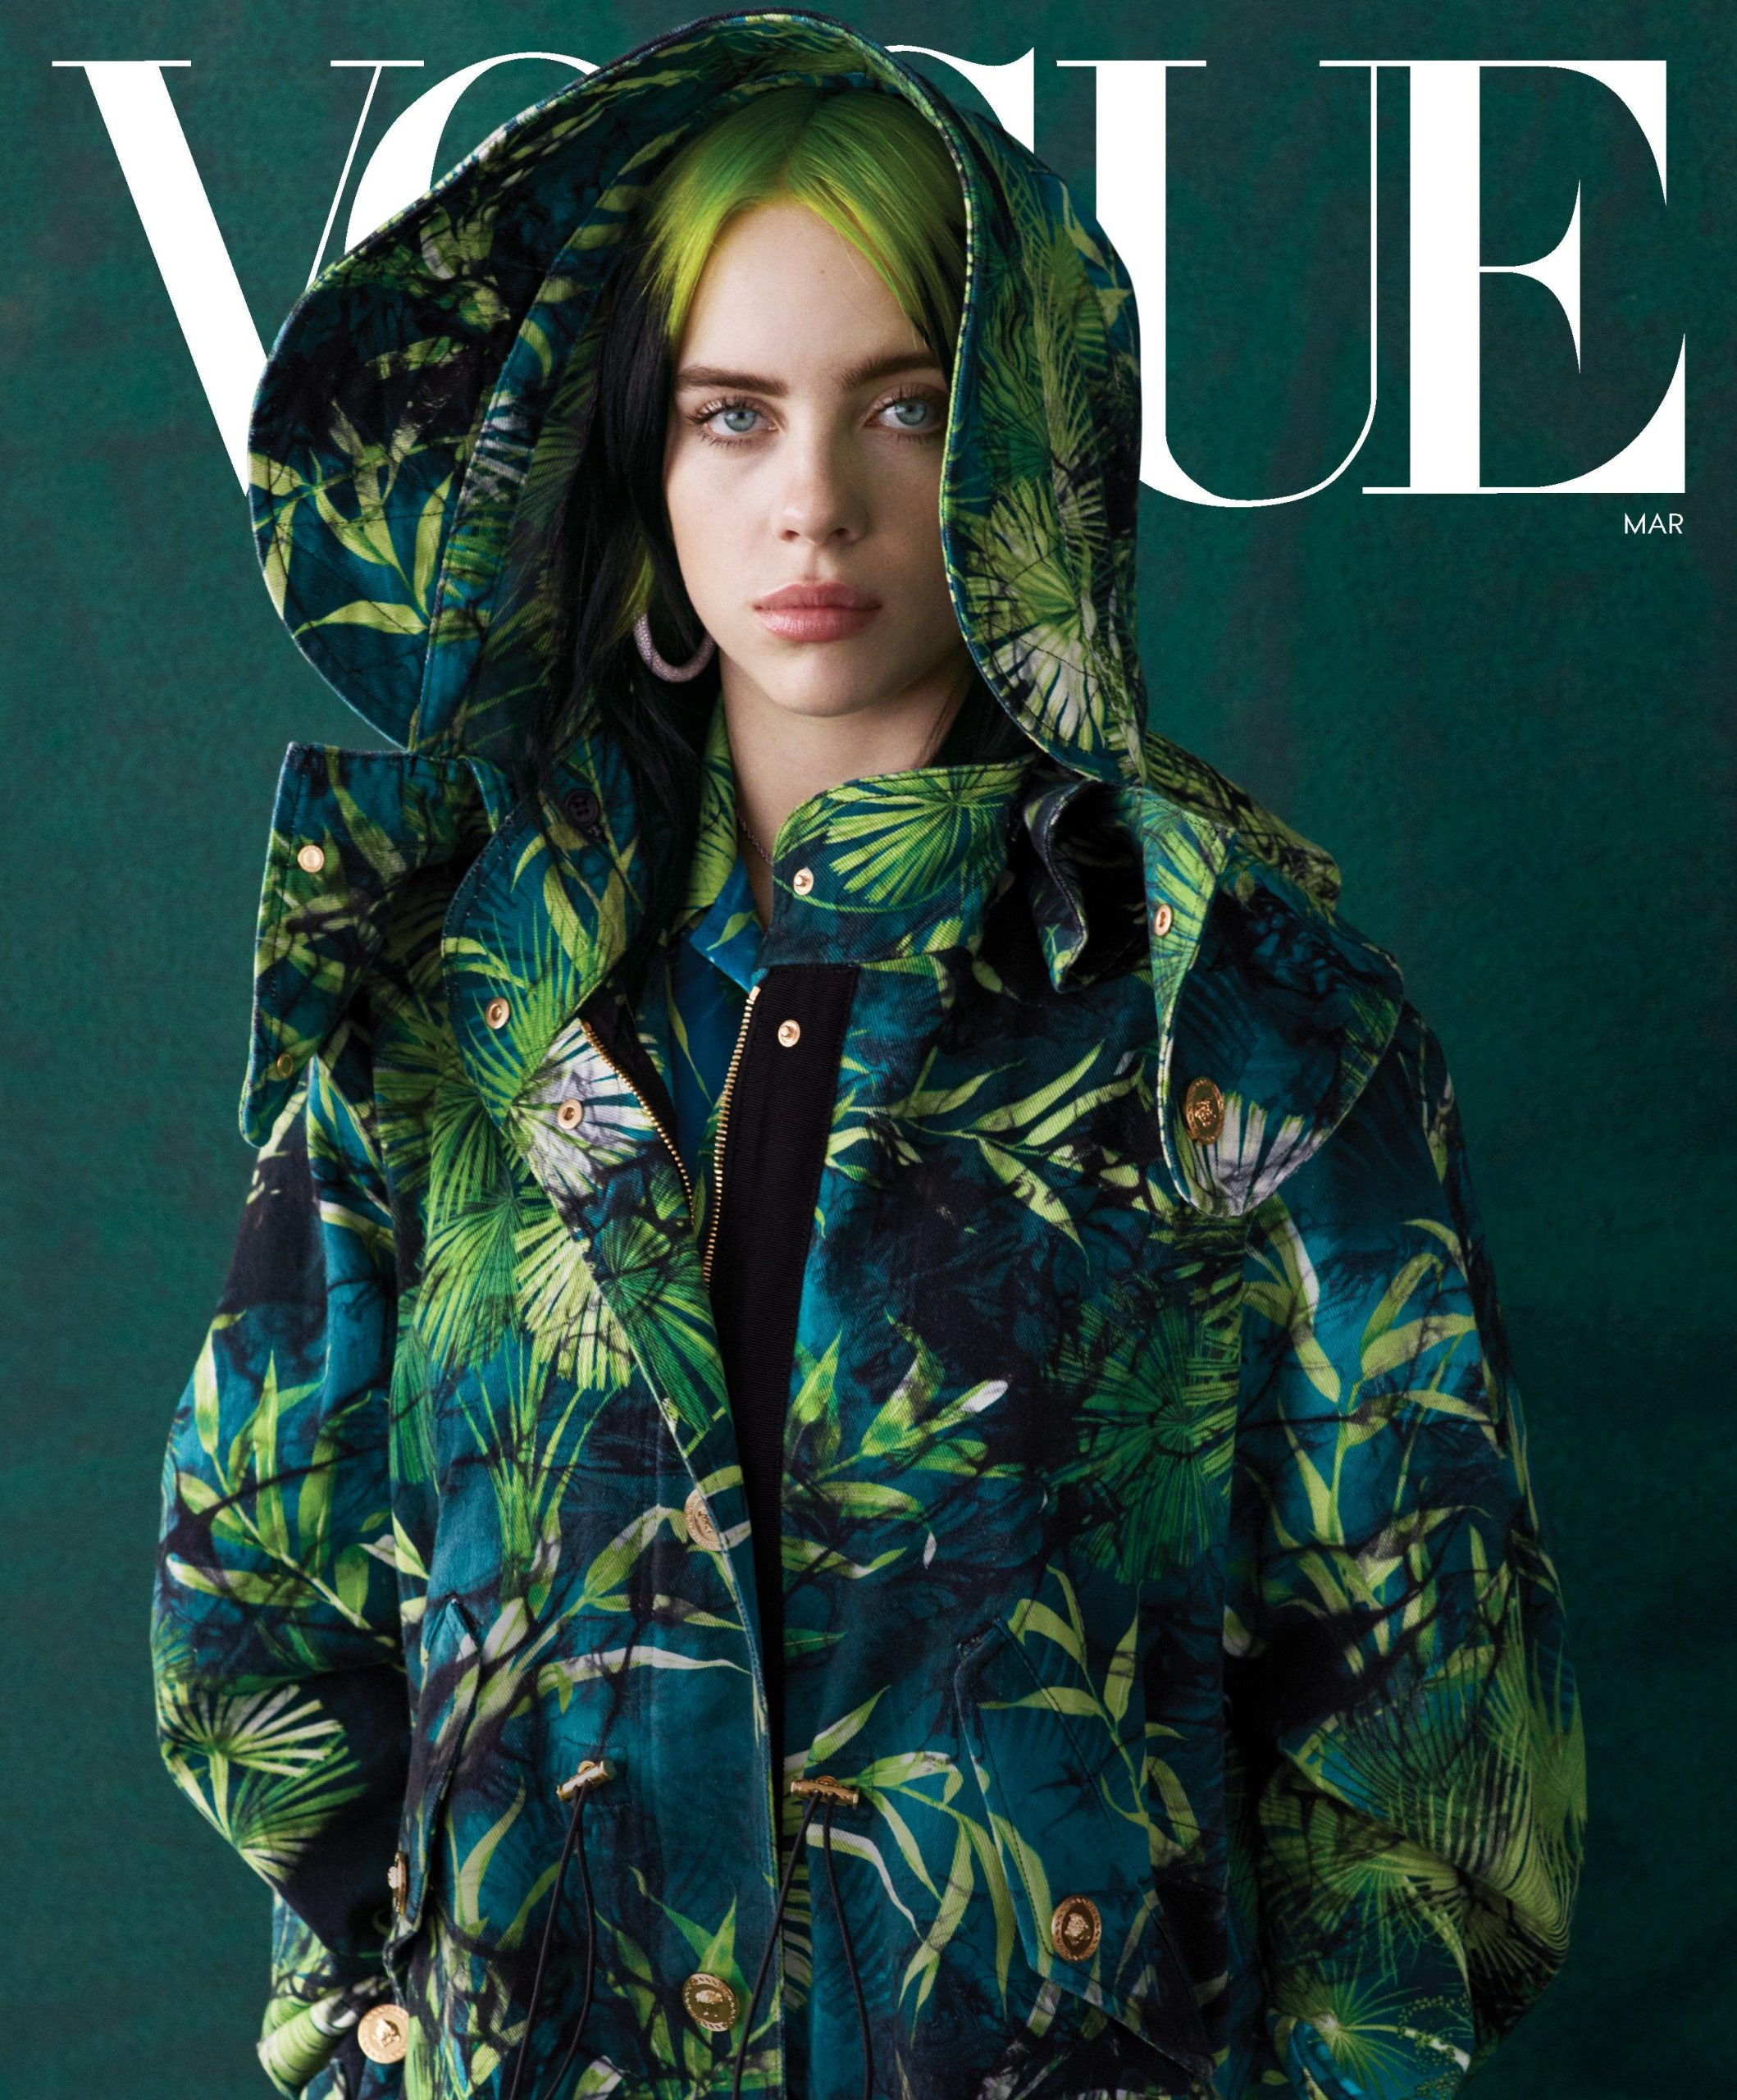 Billie Eilish Vogue Photoshoot Is Exemplary